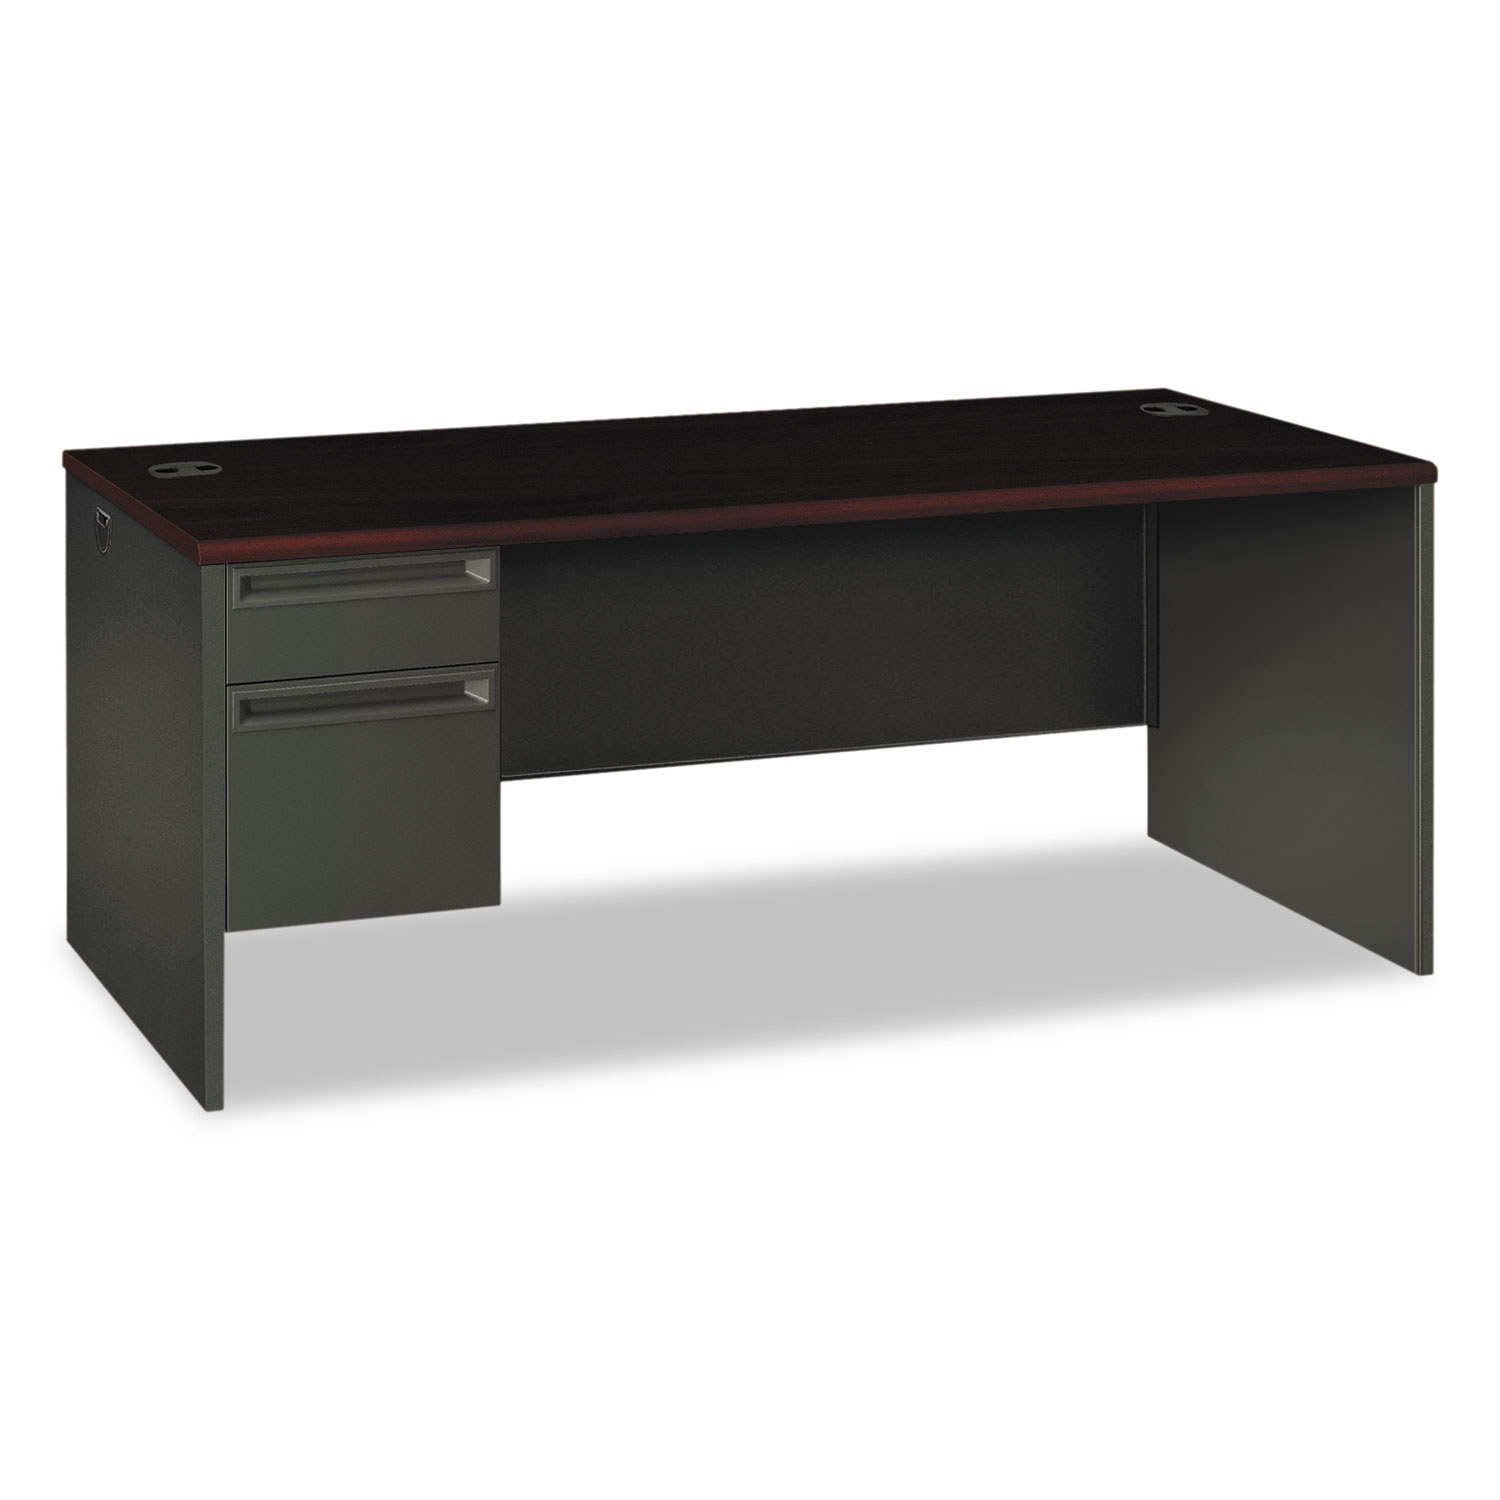  HON H38294L.N.S 38000 Series Left Pedestal Desk, 72w x 36d x 29.5h, Mahogany/Charcoal (HON38294LNS) 